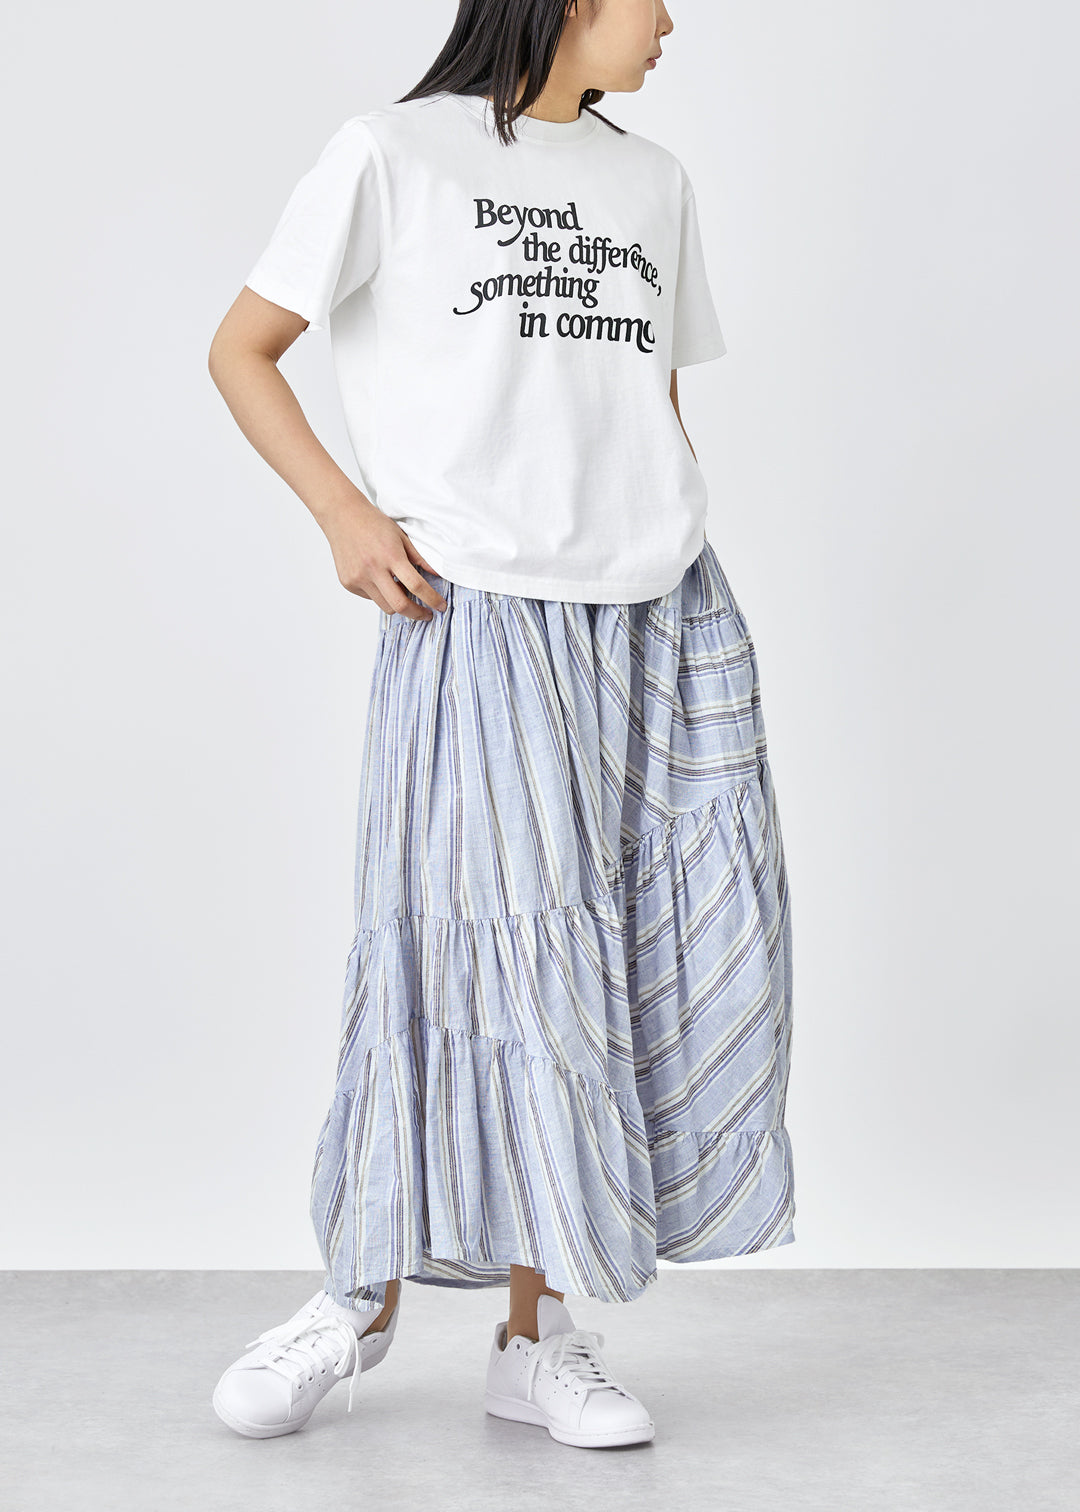 Yui Random Tiered Skirt 56s stripe